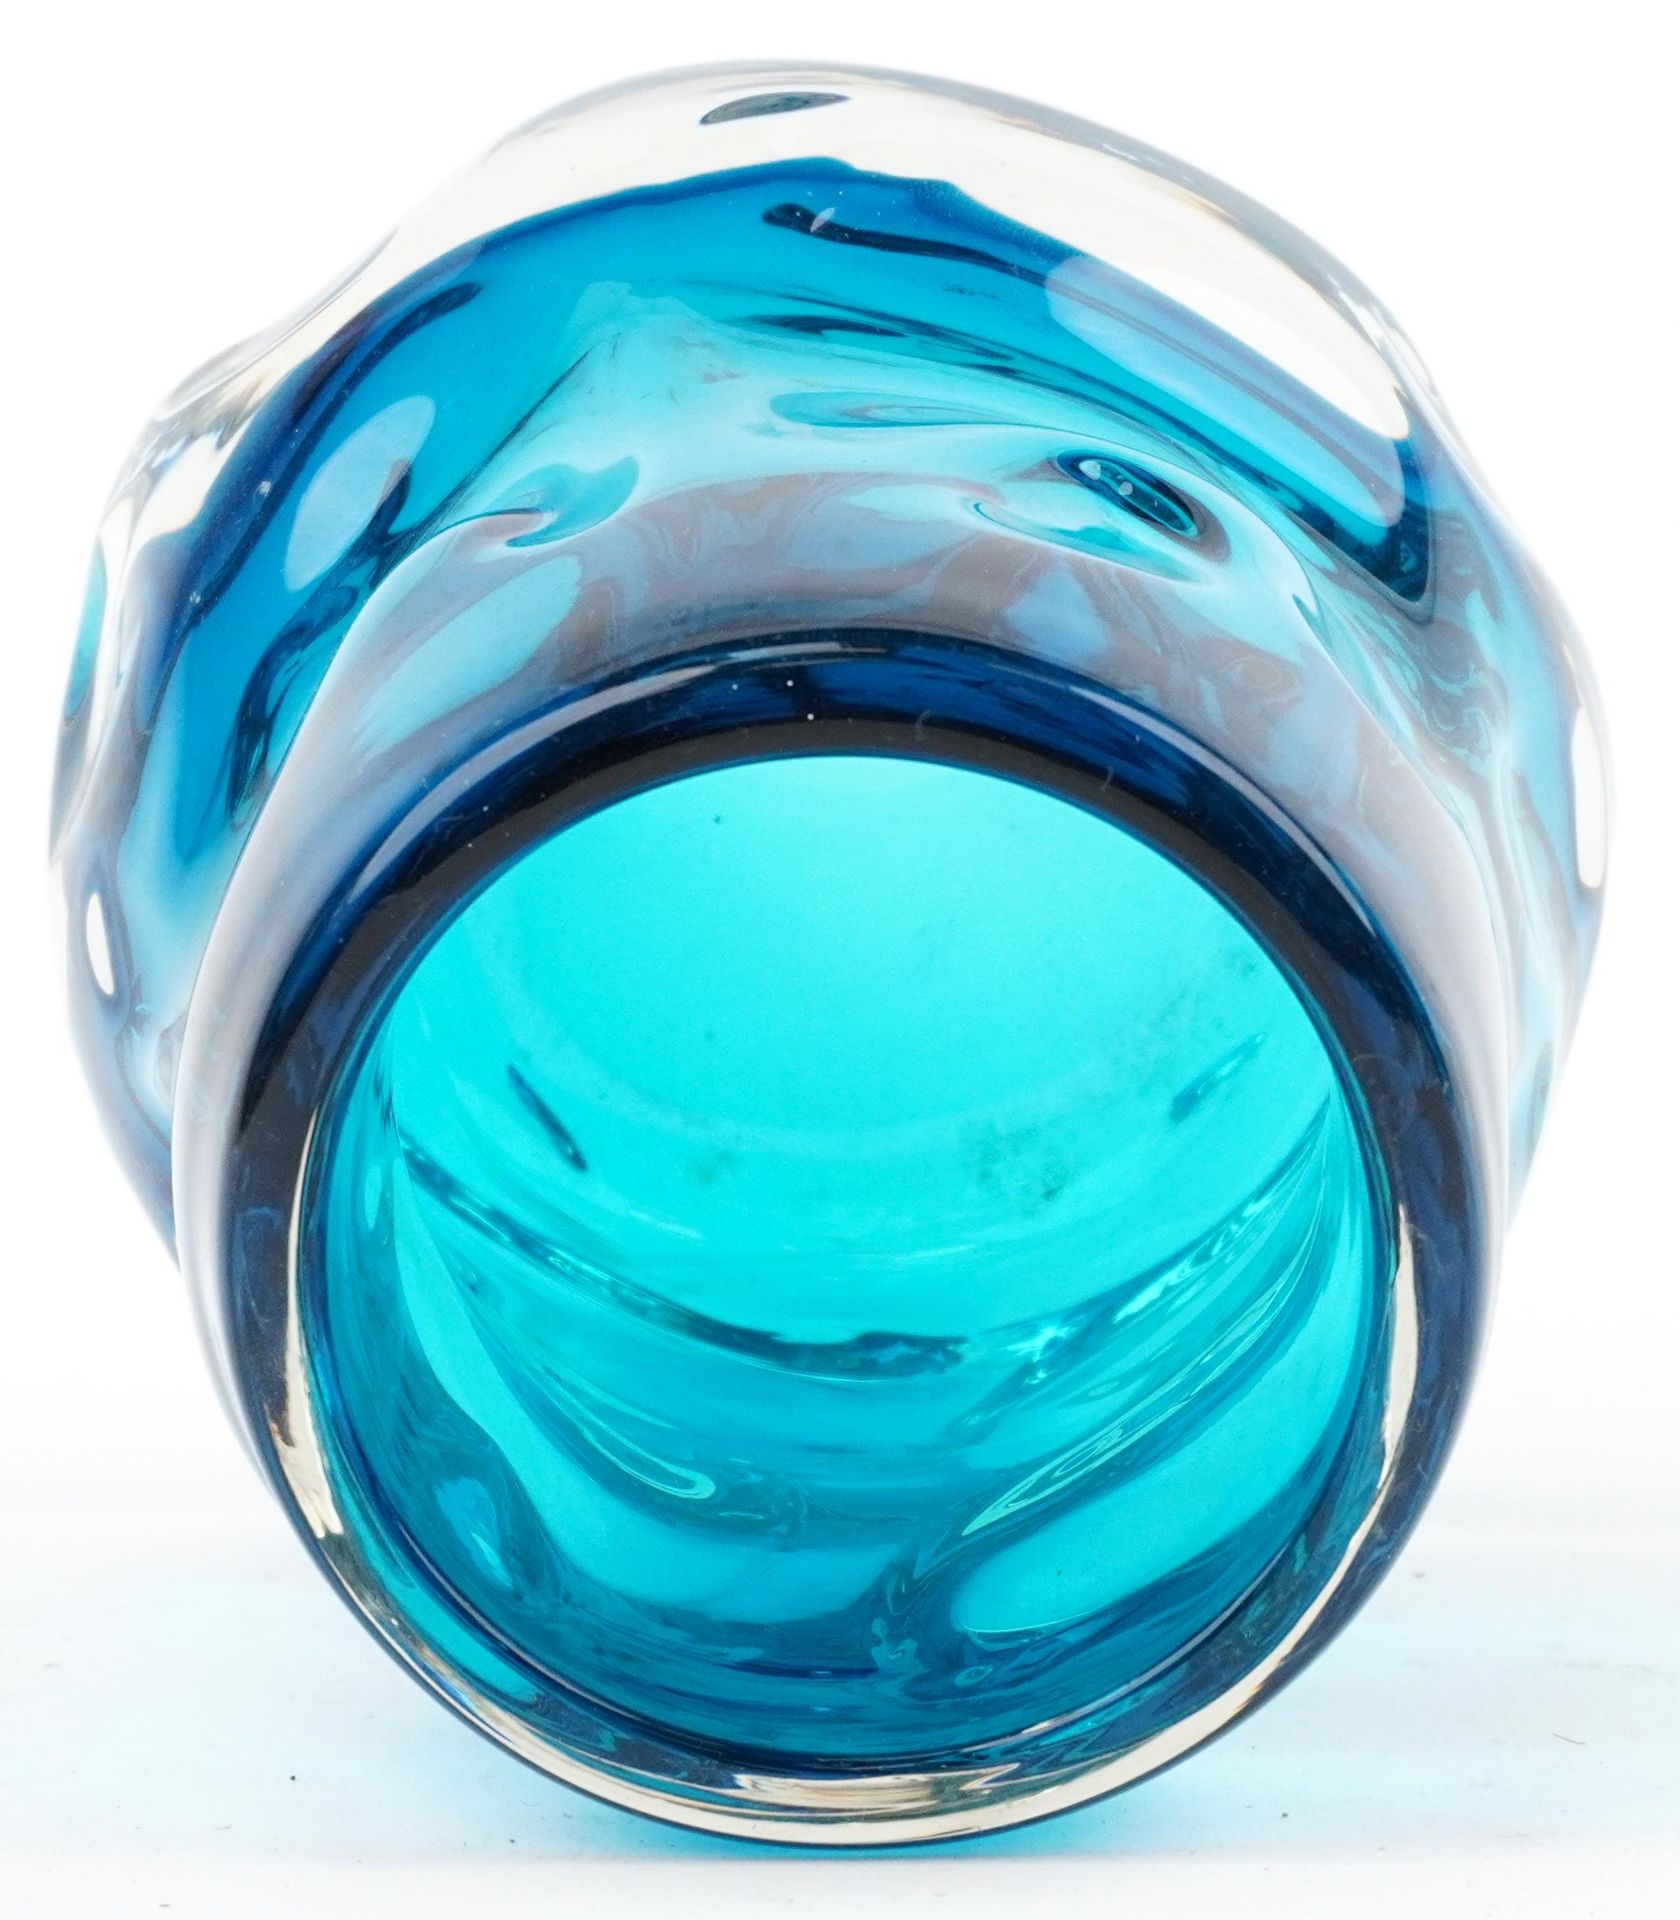 Geoffrey Baxter for Whitefriars, knobbly glass vase in kingfisher blue, 22.5cm high - Bild 3 aus 4